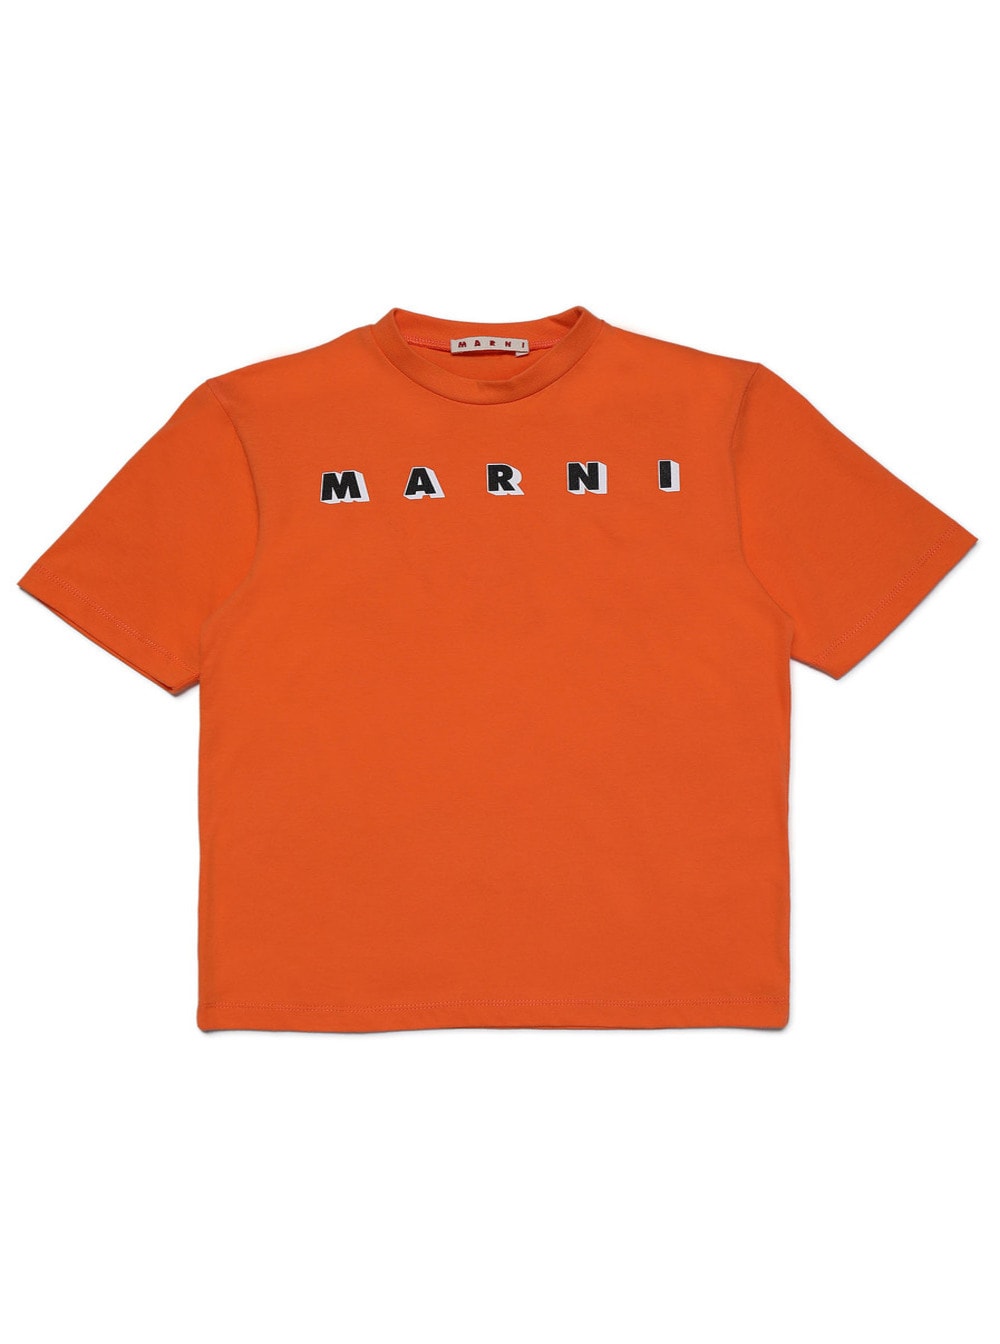 Marni Boy Orange Cotton T-shirt With Logo Print